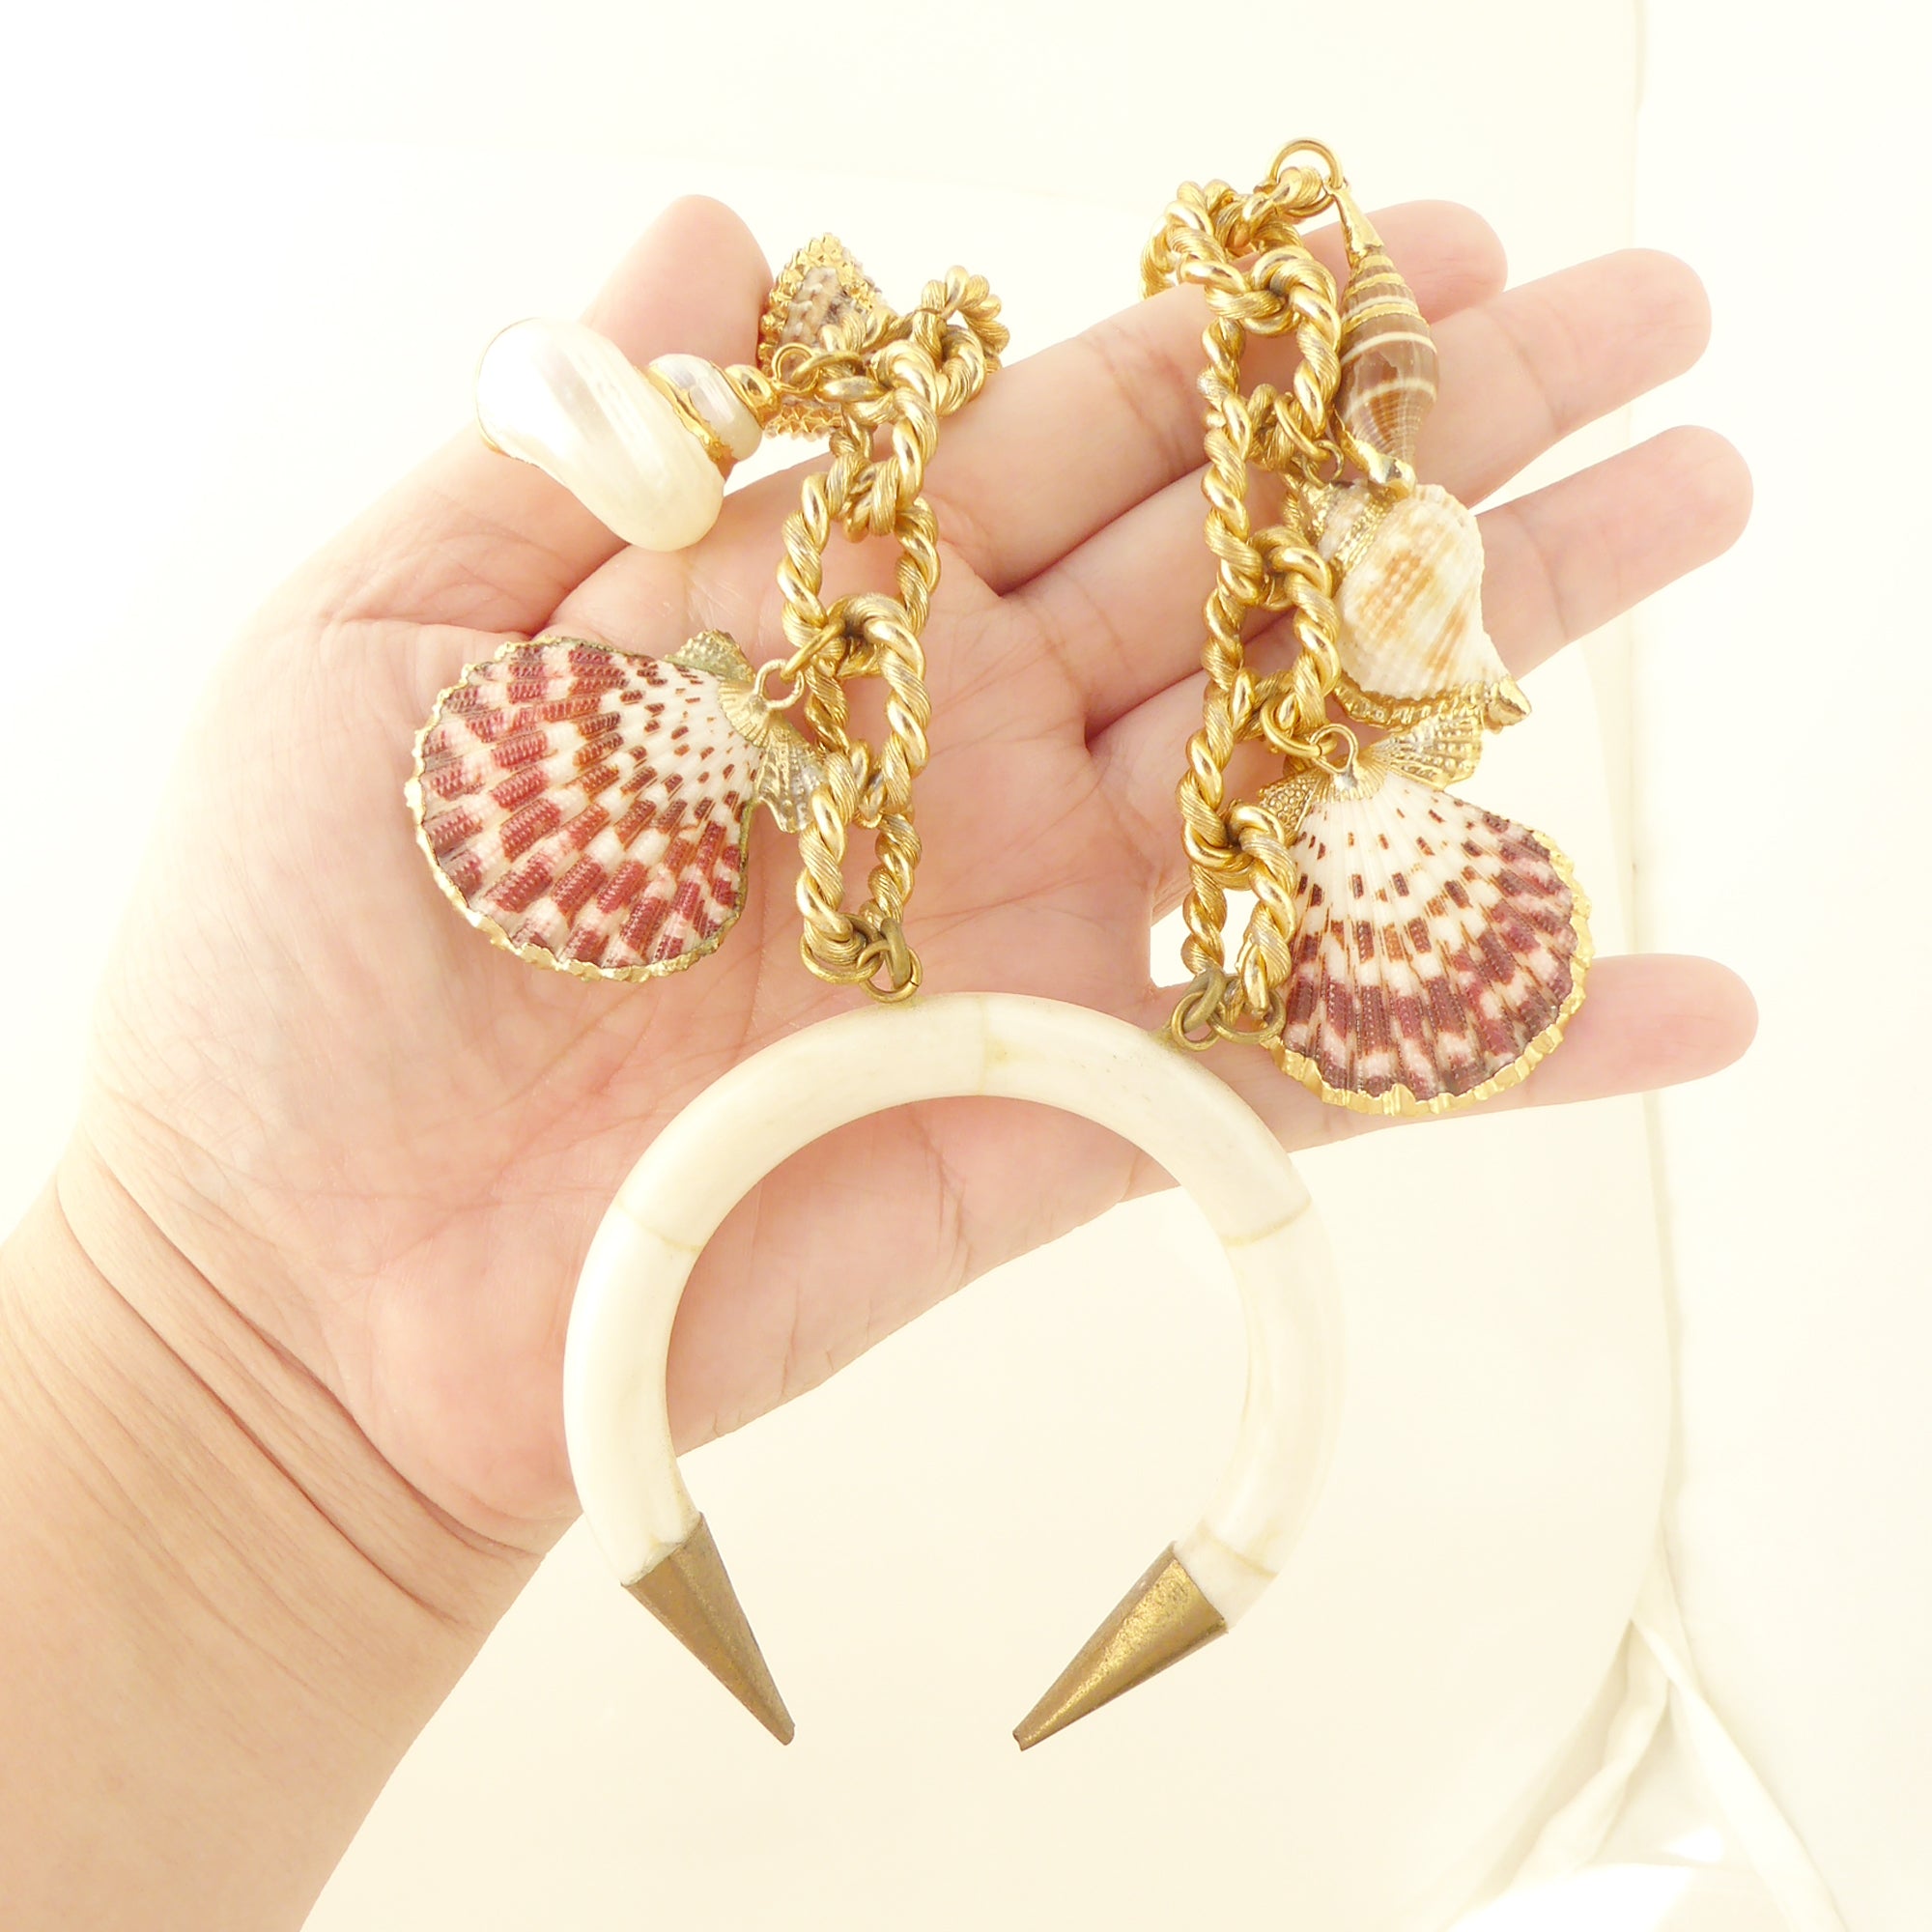 Seashell necklace by Jenny Dayco 7